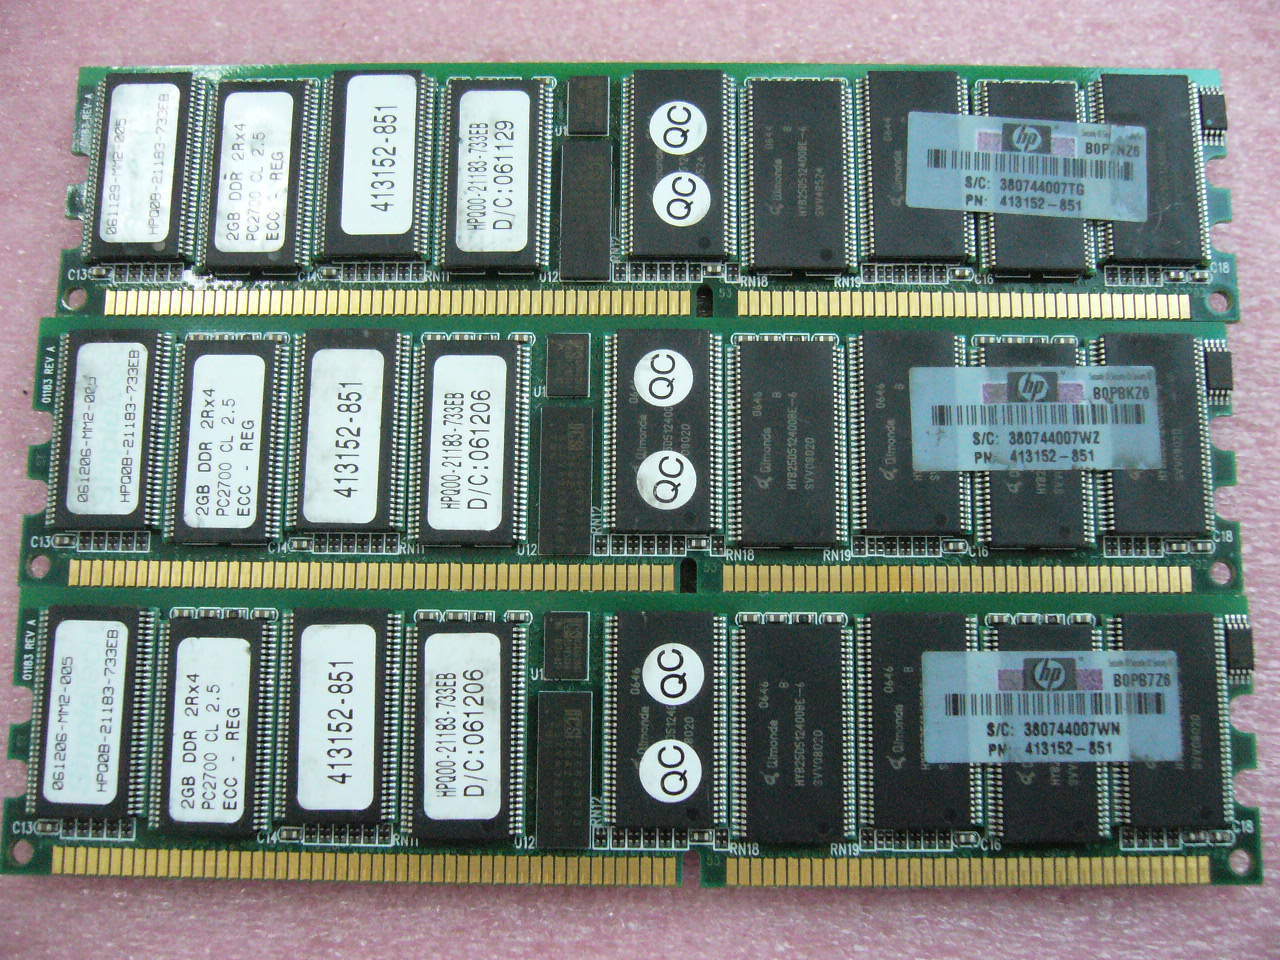 1x 2GB DDR 333 PC-2700R ECC Registered Server memory HP PN 413152-851 - Click Image to Close